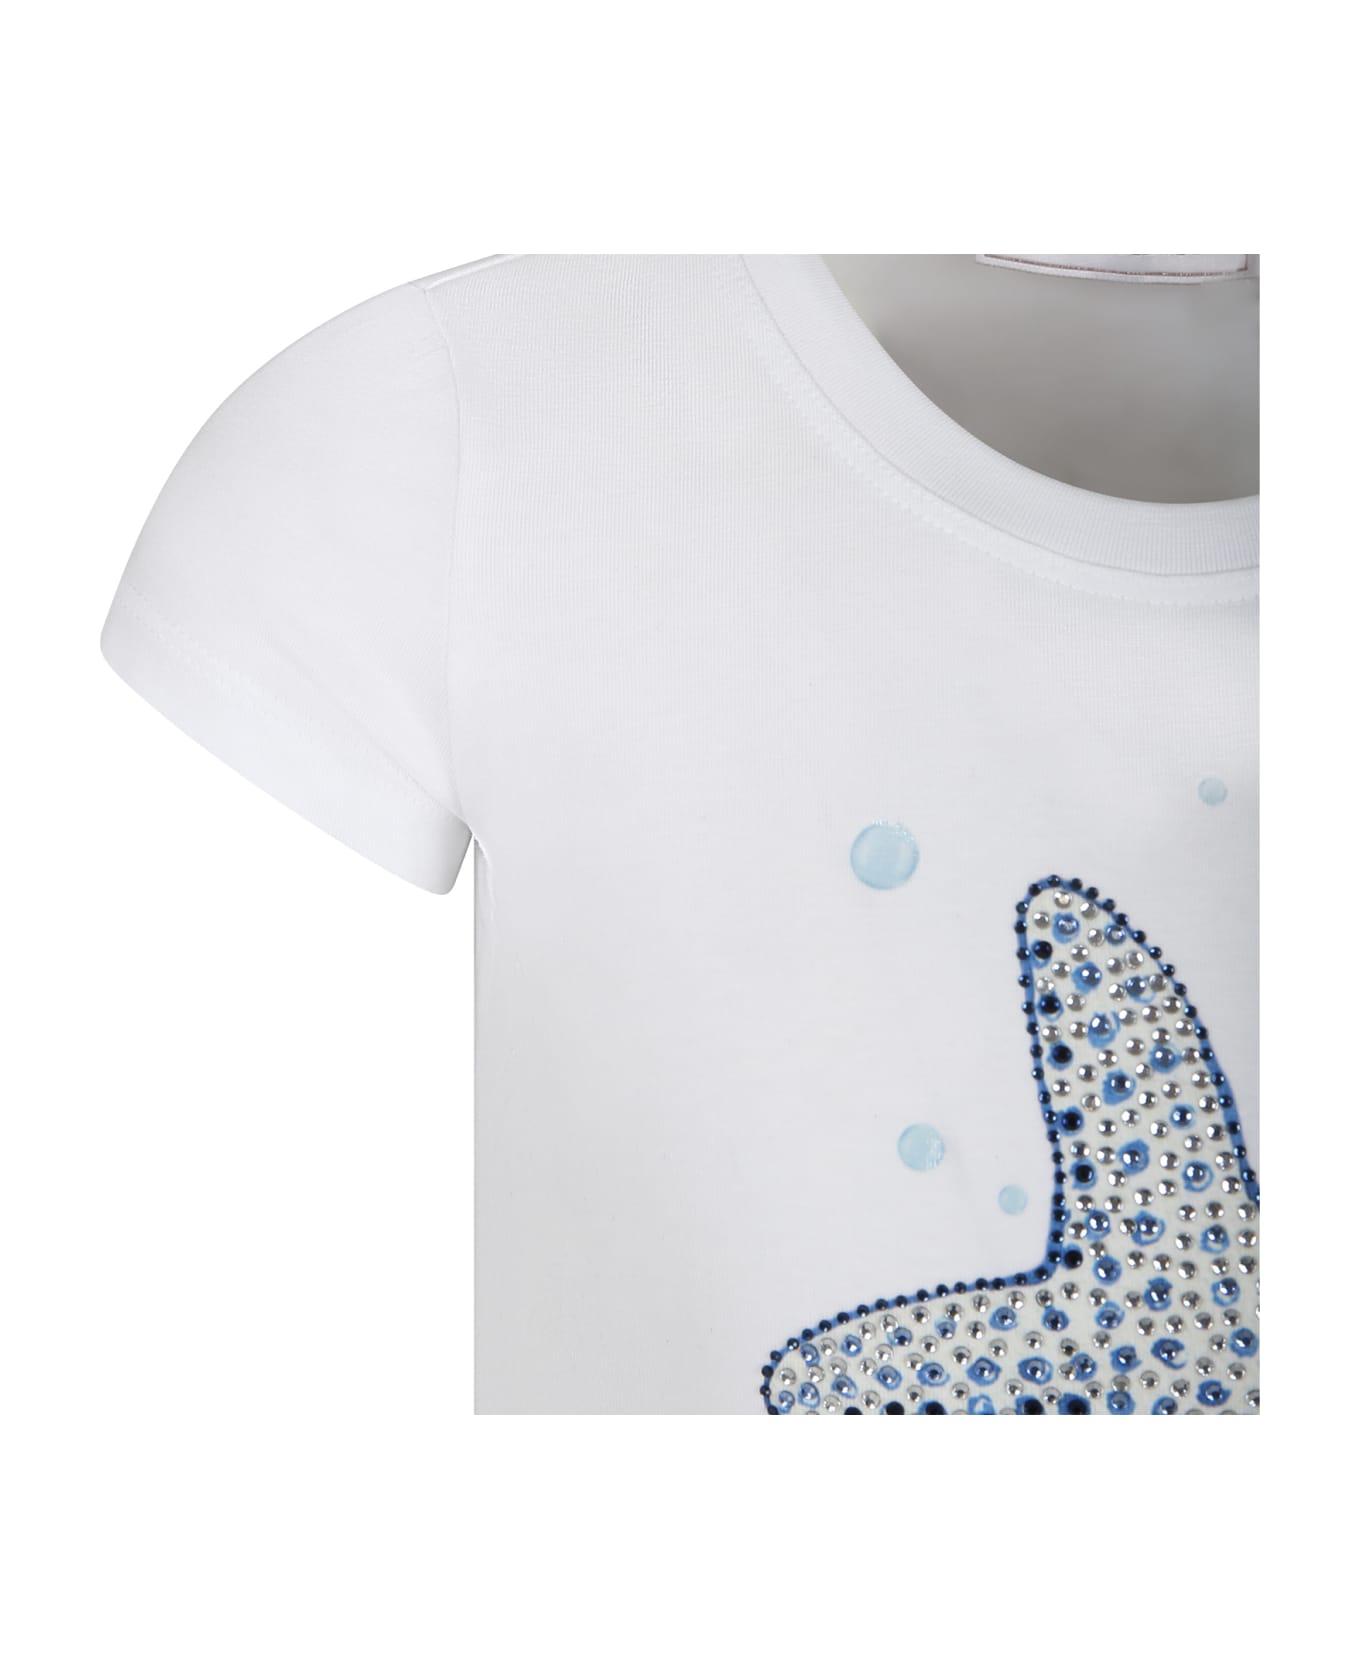 Monnalisa White T-shirt For Girl With Starfish And Logo - White